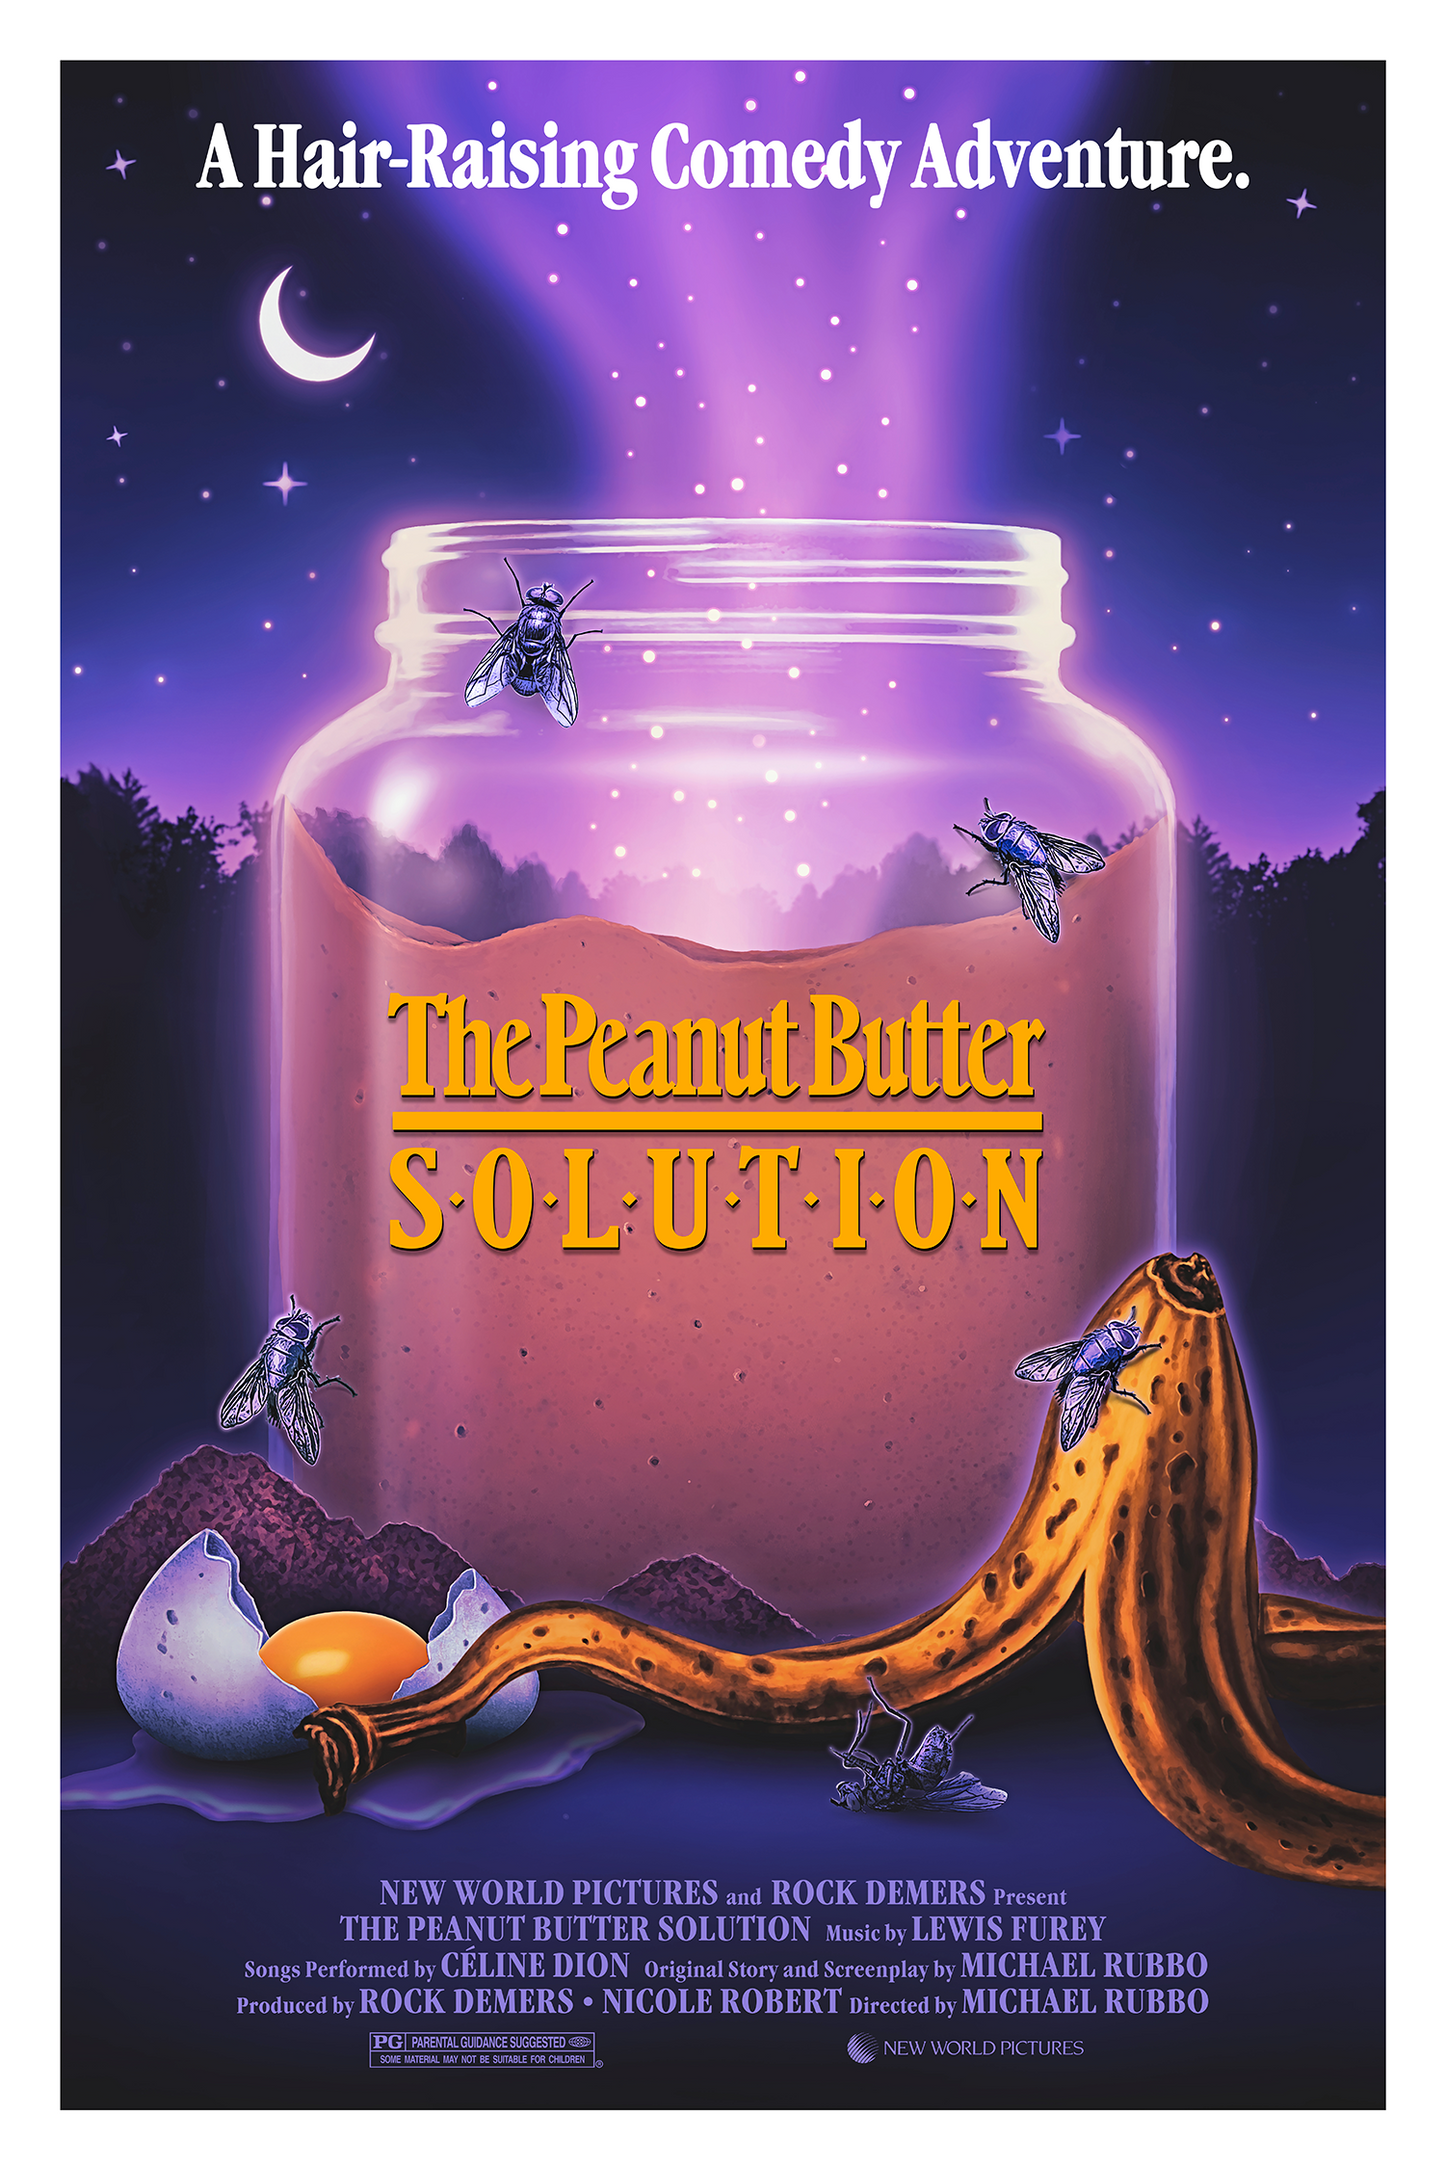 Marc Schoenbach "The Peanut Butter Solution"